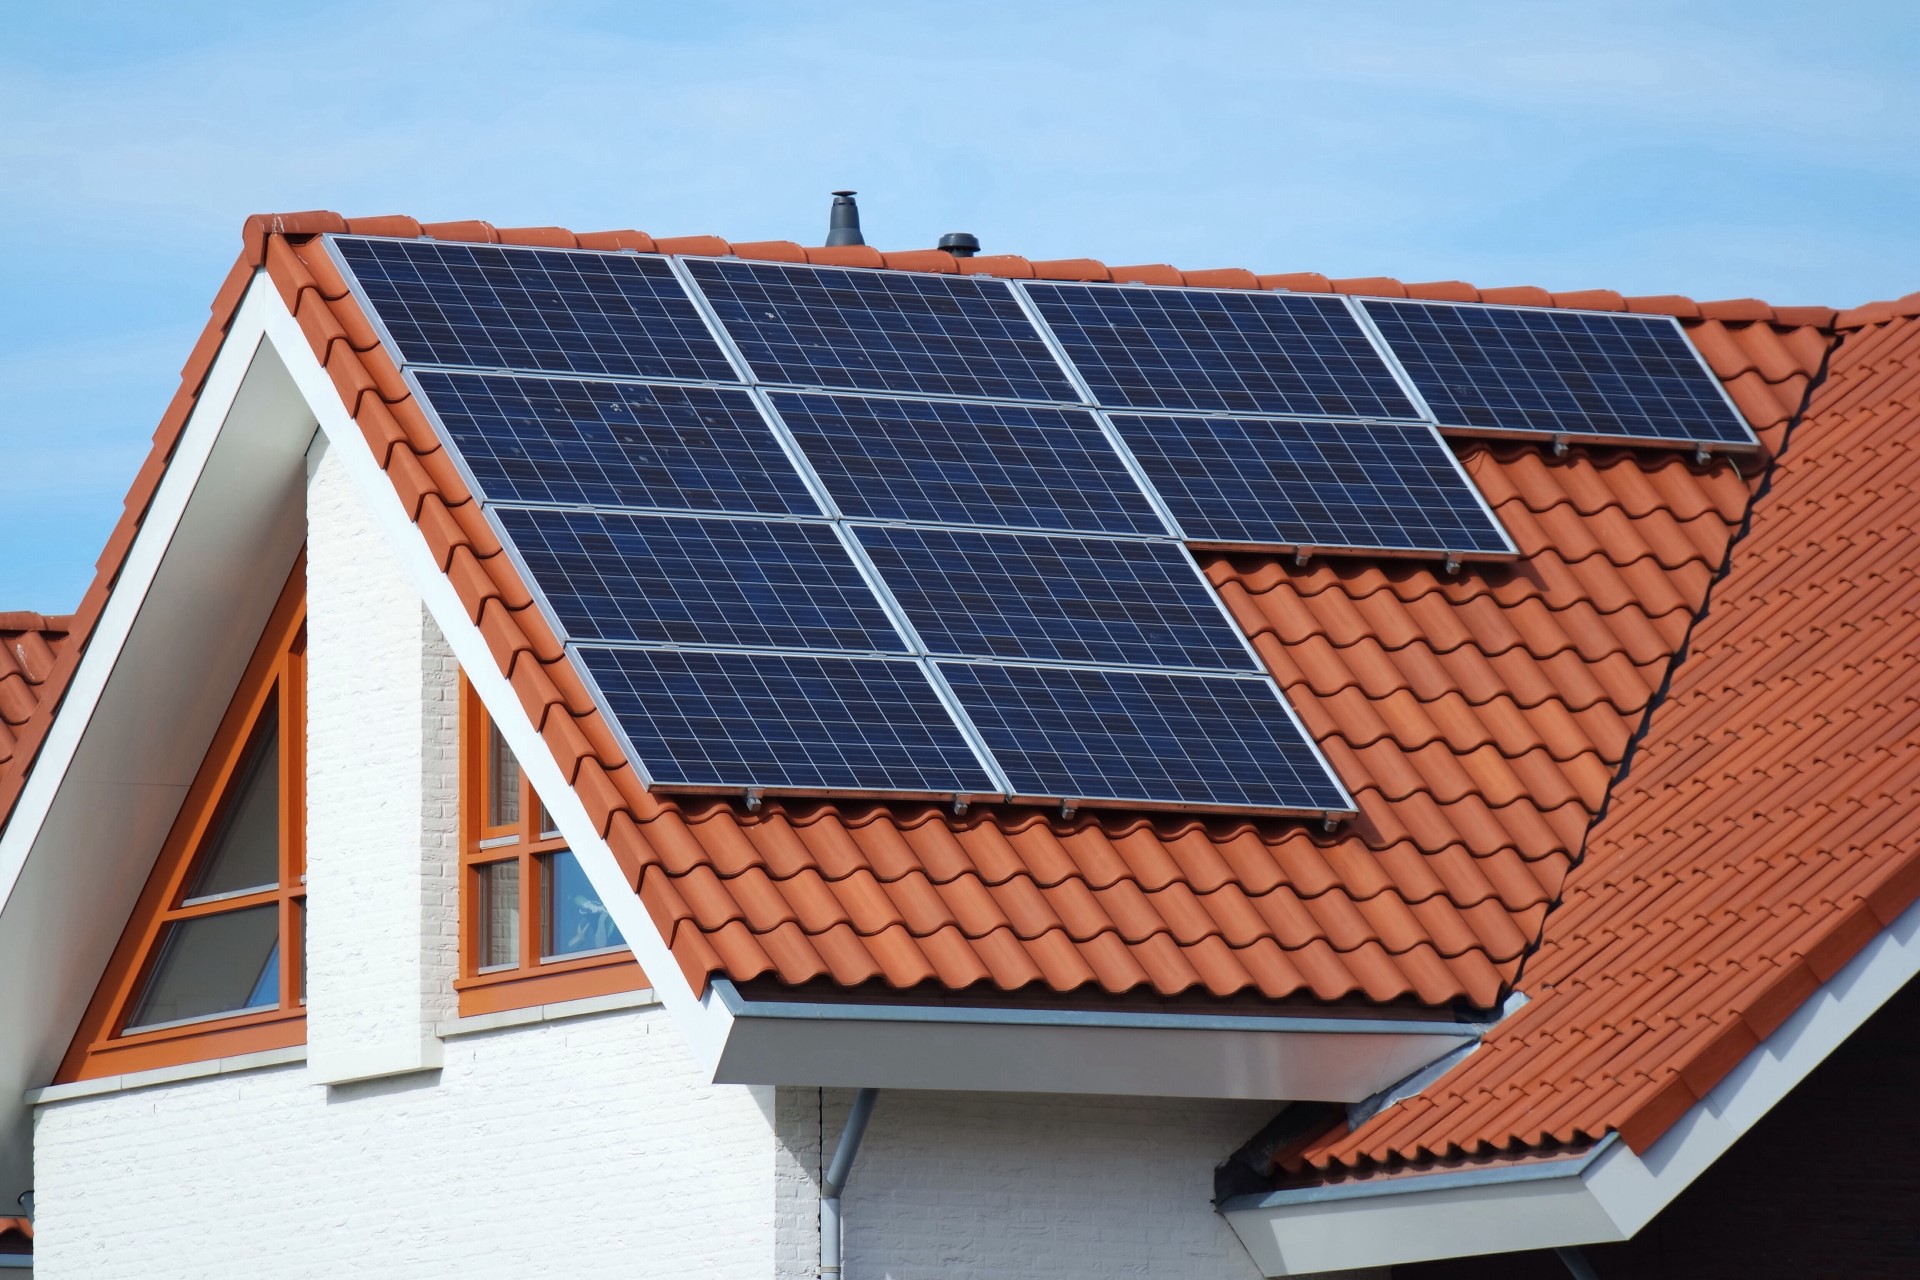 Roof top solar panels